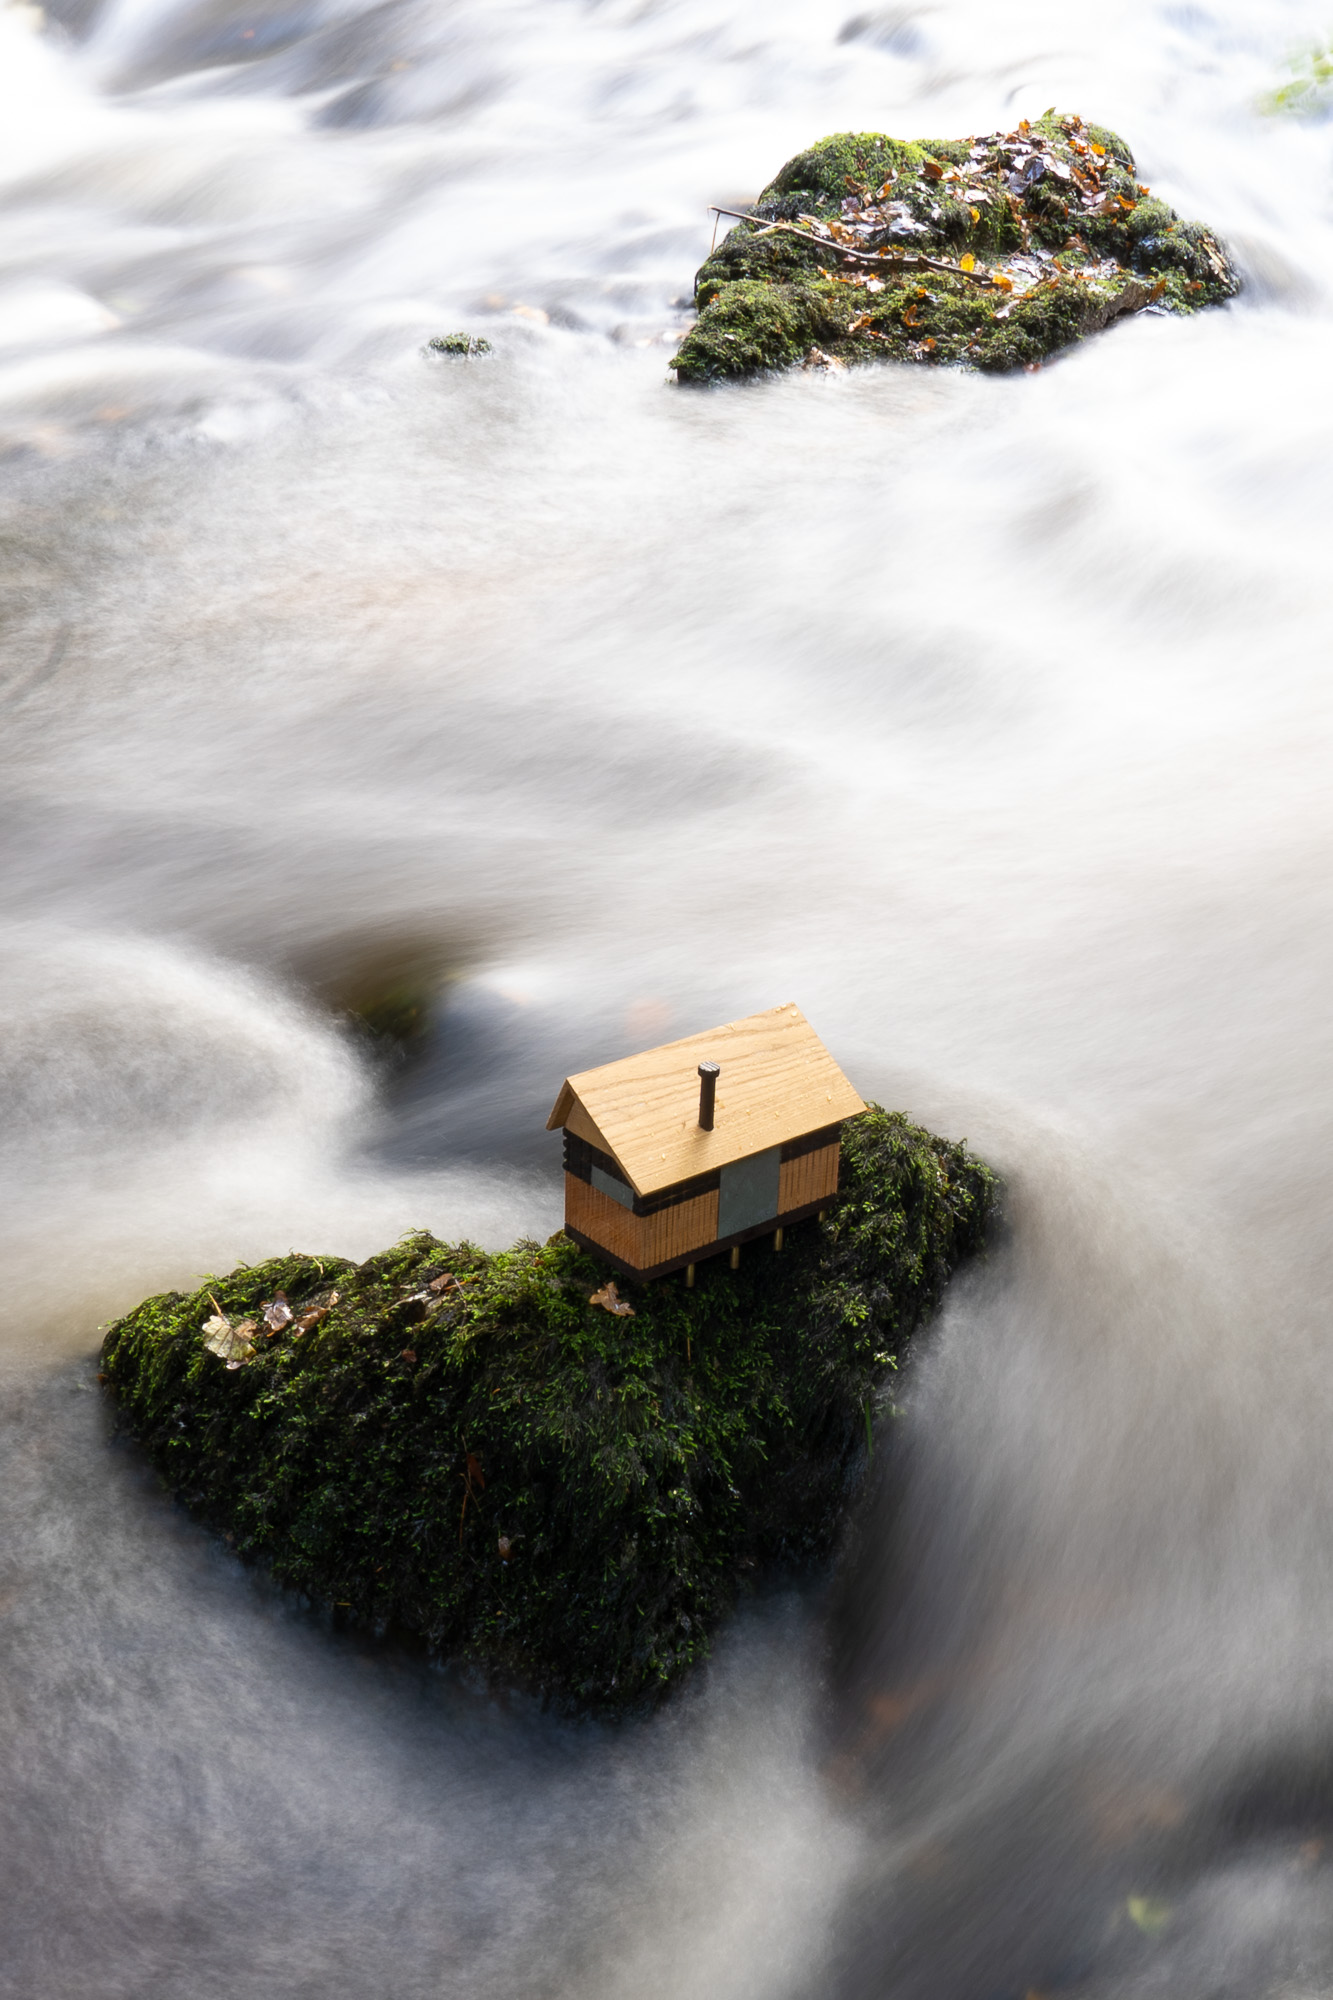 cabin model on a rock in a dartmoor river